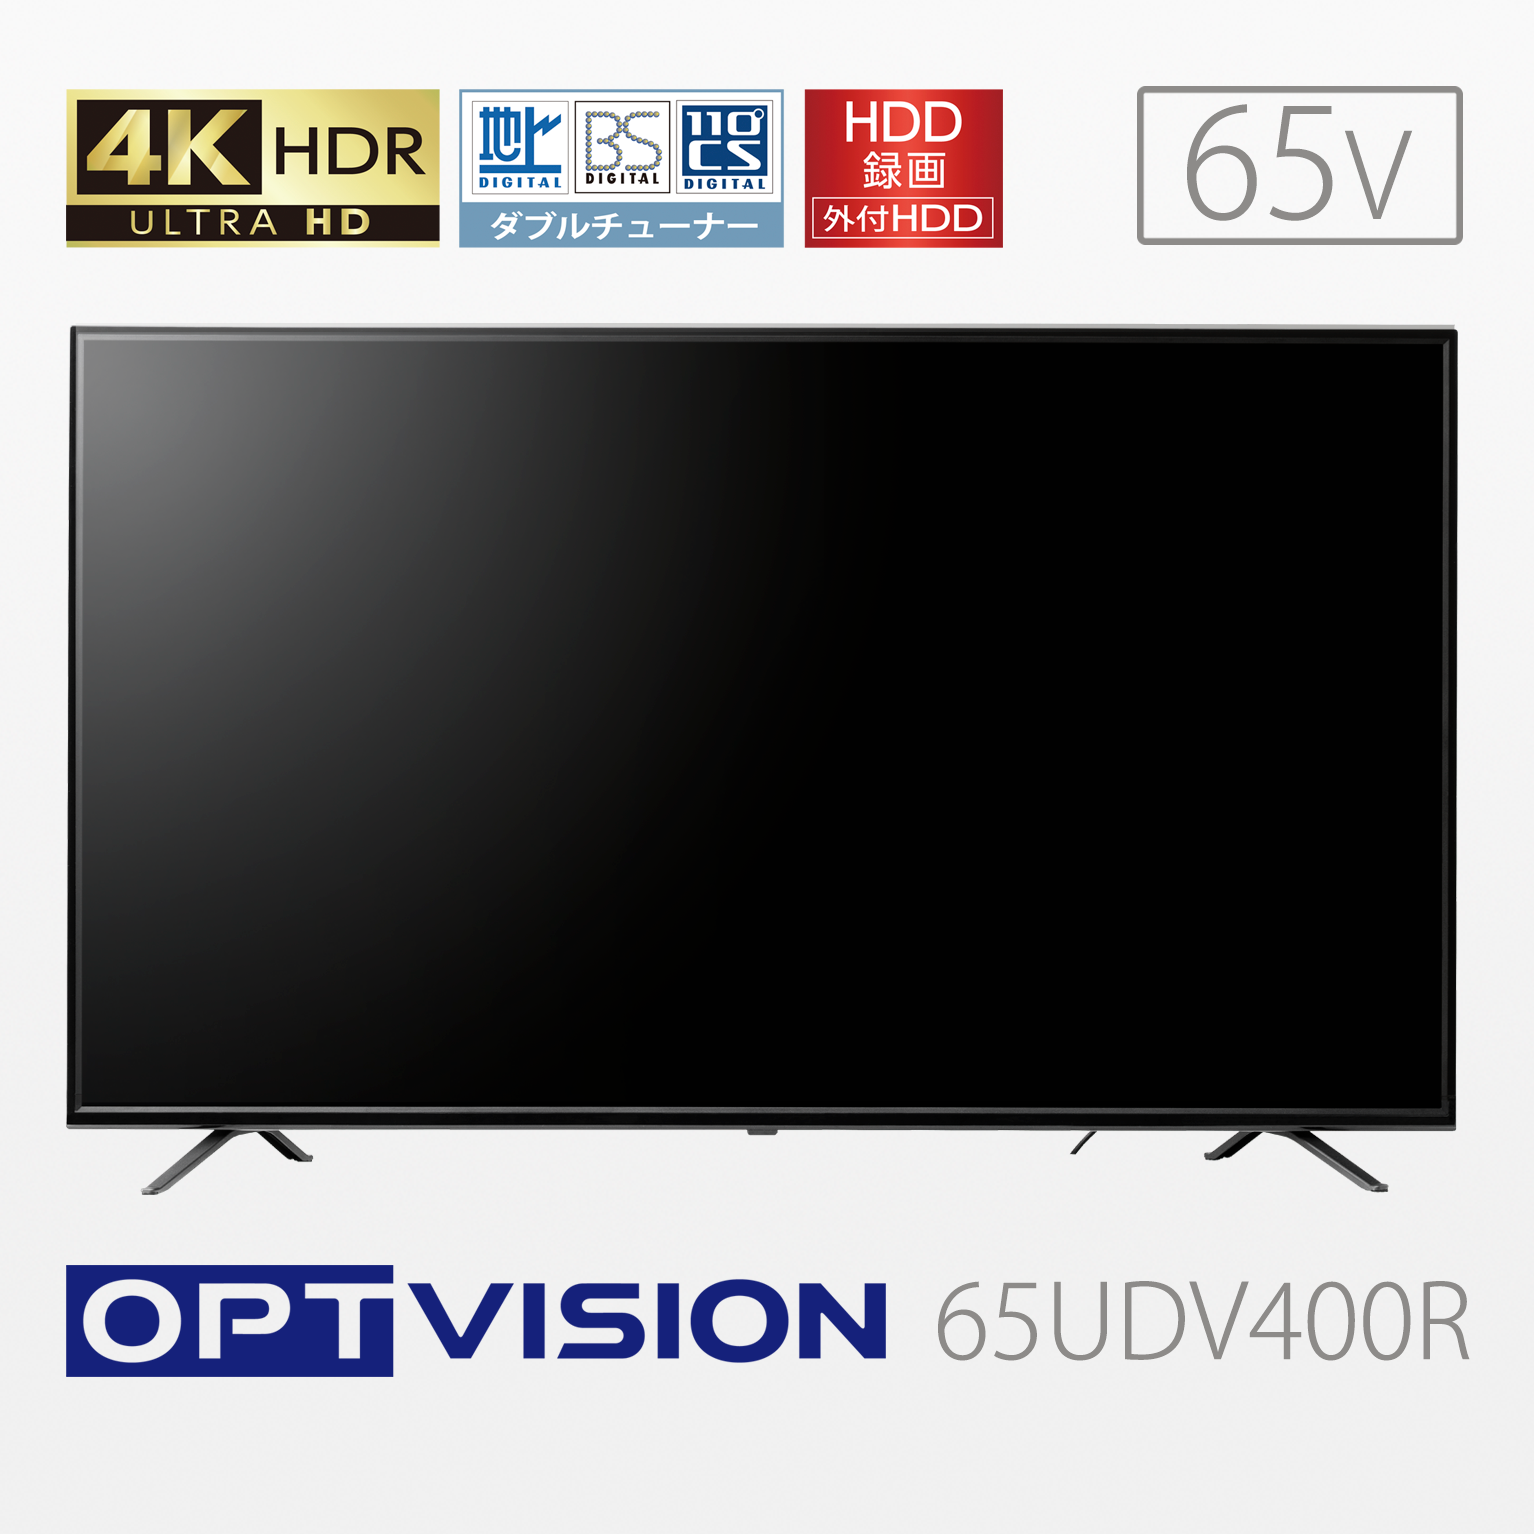 'OPTVISION 65v型 HDR対応4K液晶テレビ 65UDV400R（3年間延長保証あり）'